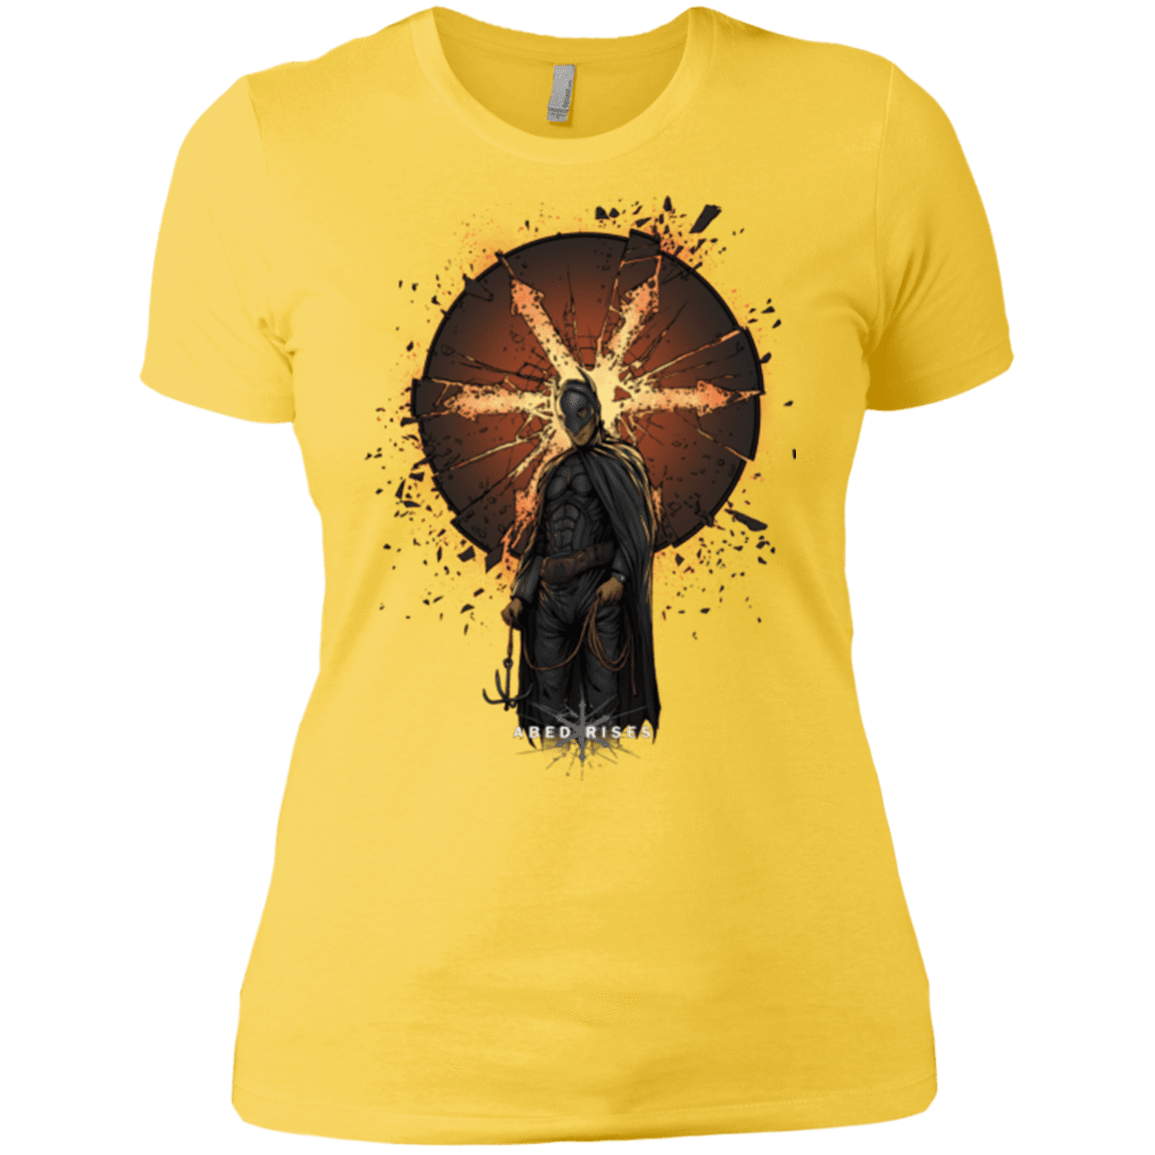 T-Shirts Vibrant Yellow / X-Small Abed Rises Women's Premium T-Shirt